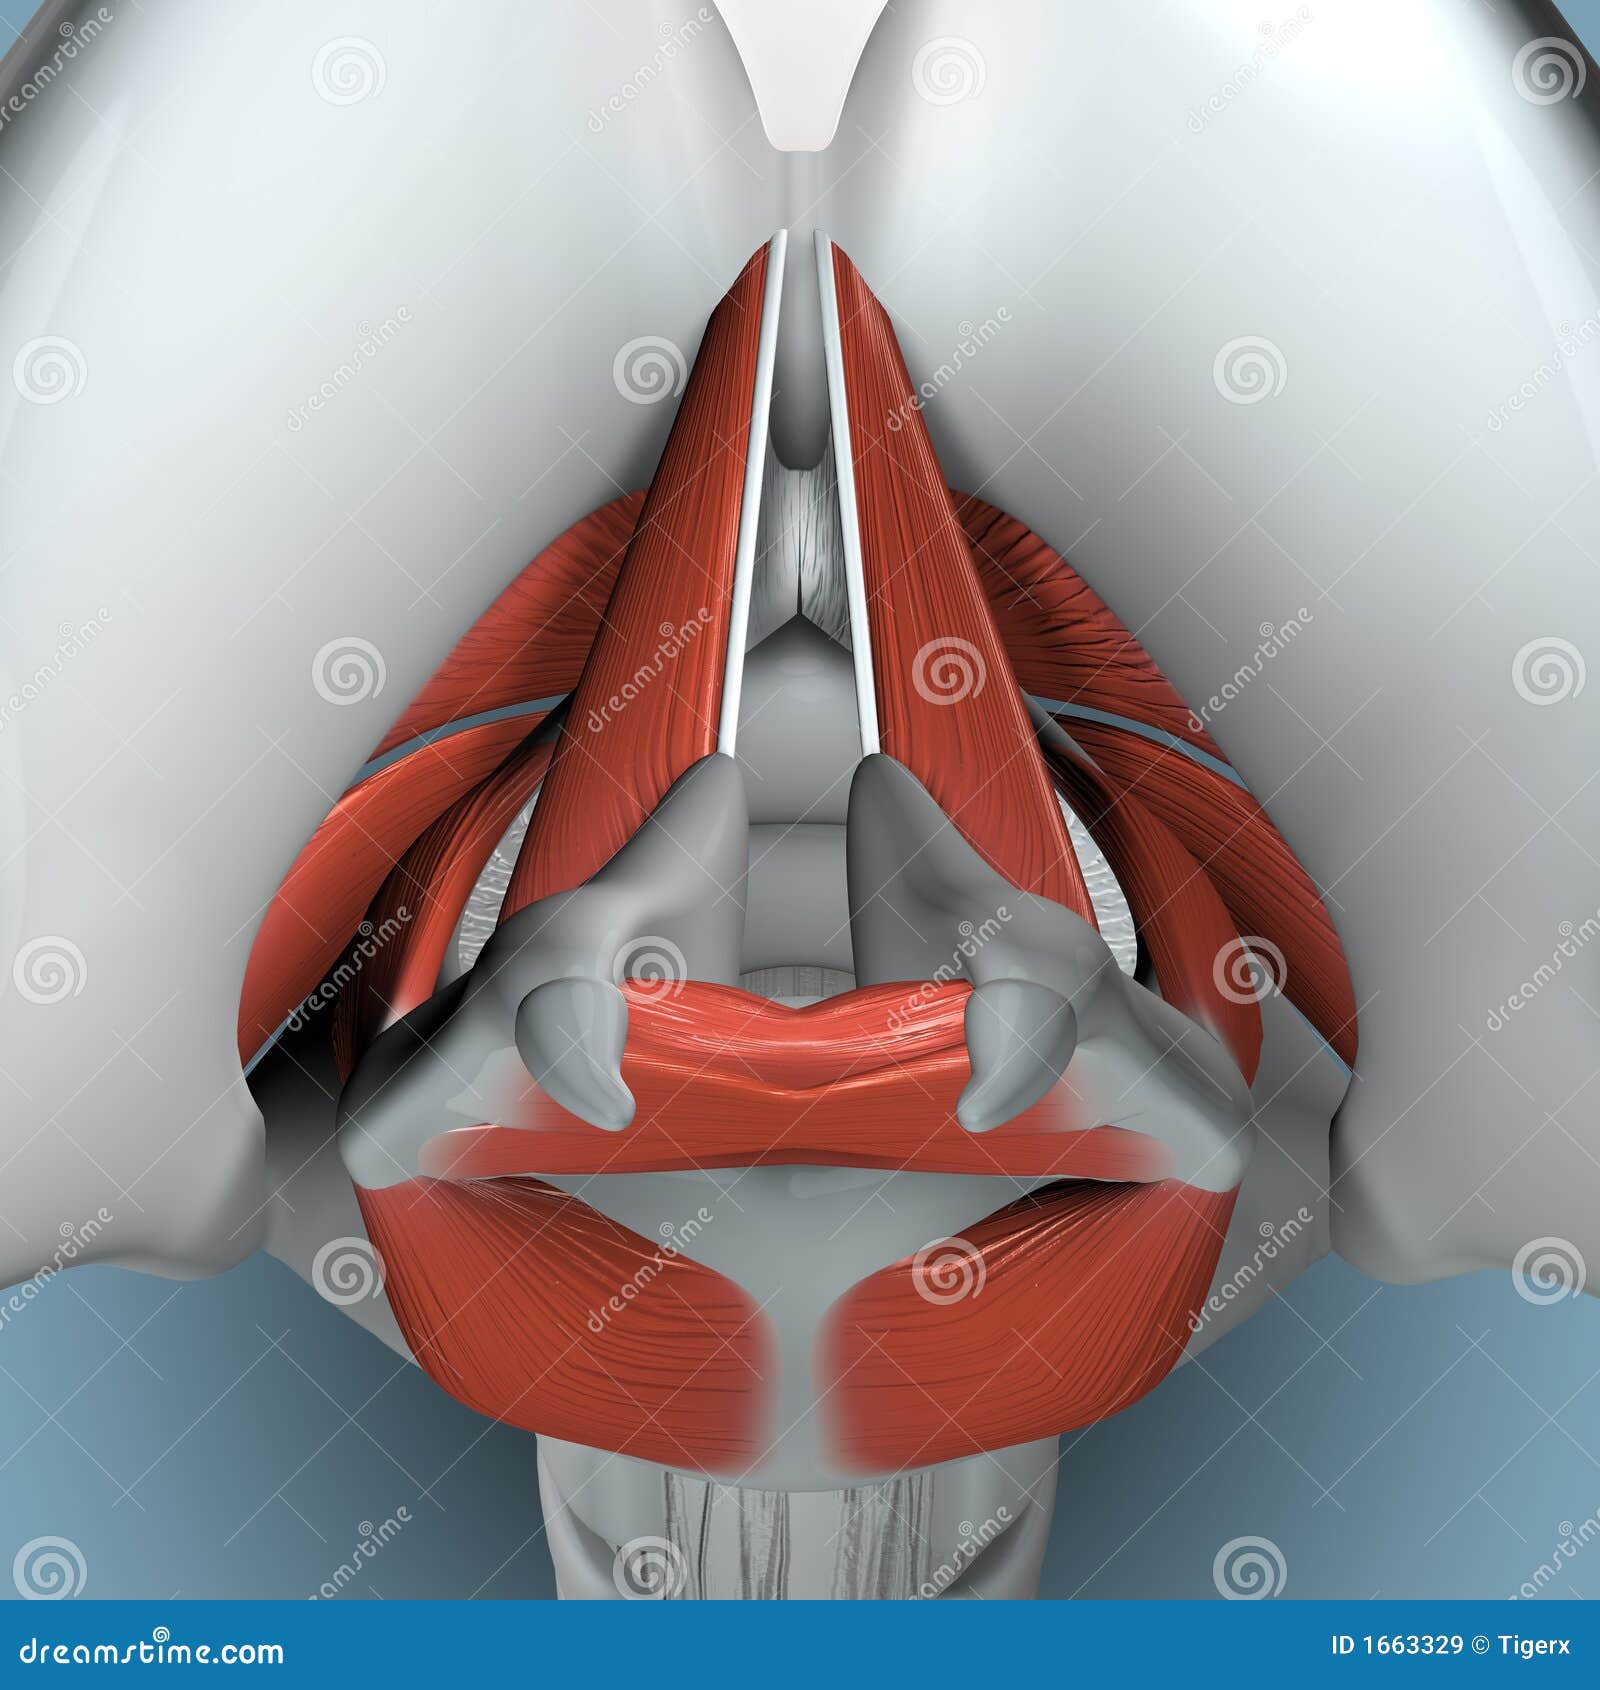 anatomy of larynx